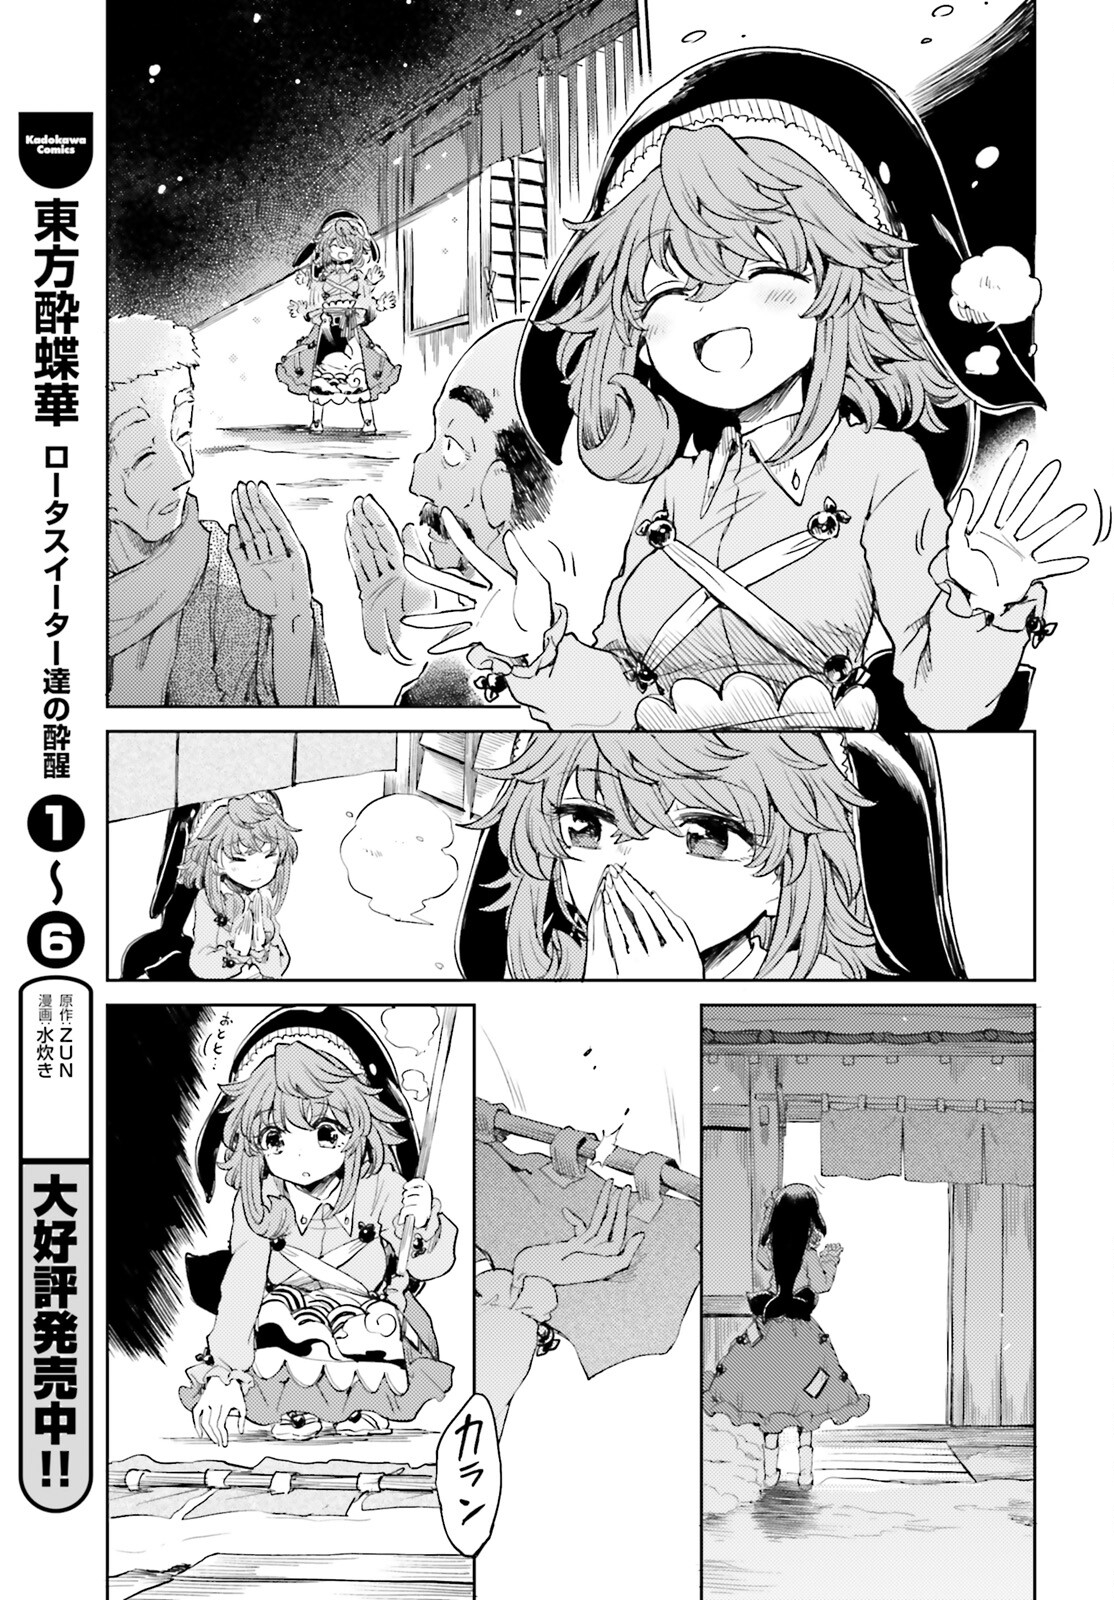 Touhouyoi Chouka Routasuiitaa-tachi no Yoiza - Chapter 49 - Page 3